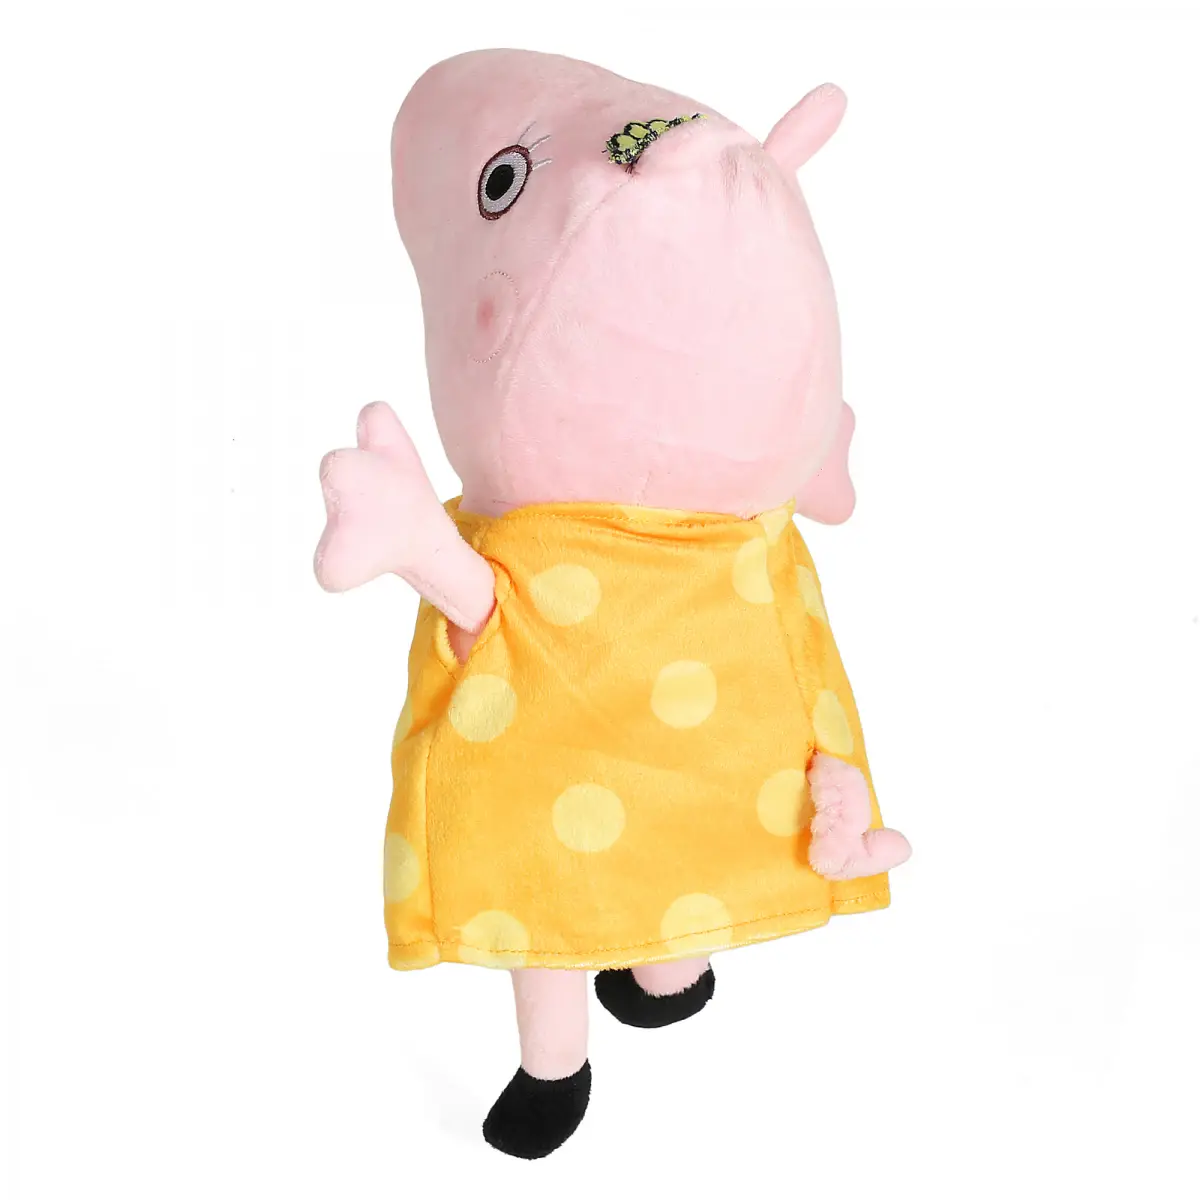 Peppa Pig Grandma Pig Soft Toy for Kids, 30cm, Yellow